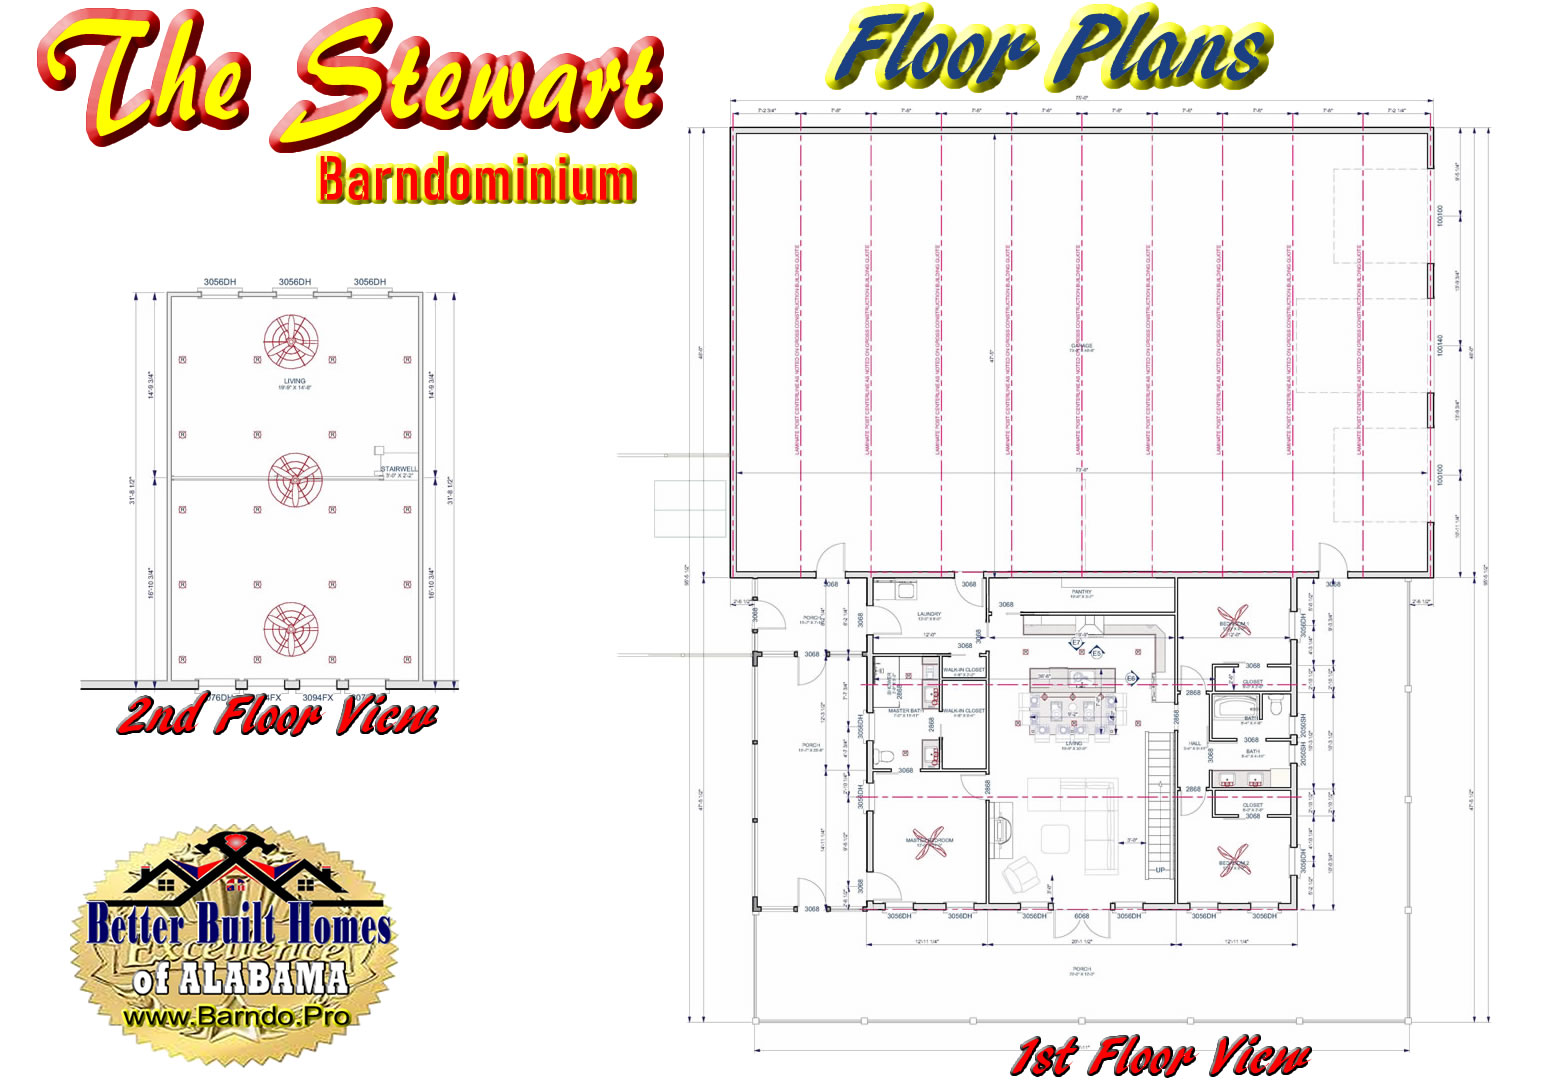 STEWART BARNDOMINIUM FLOOR PLANS BUILT BY BETTER BUILT HOMES OF ALABAMA Barndo Pro